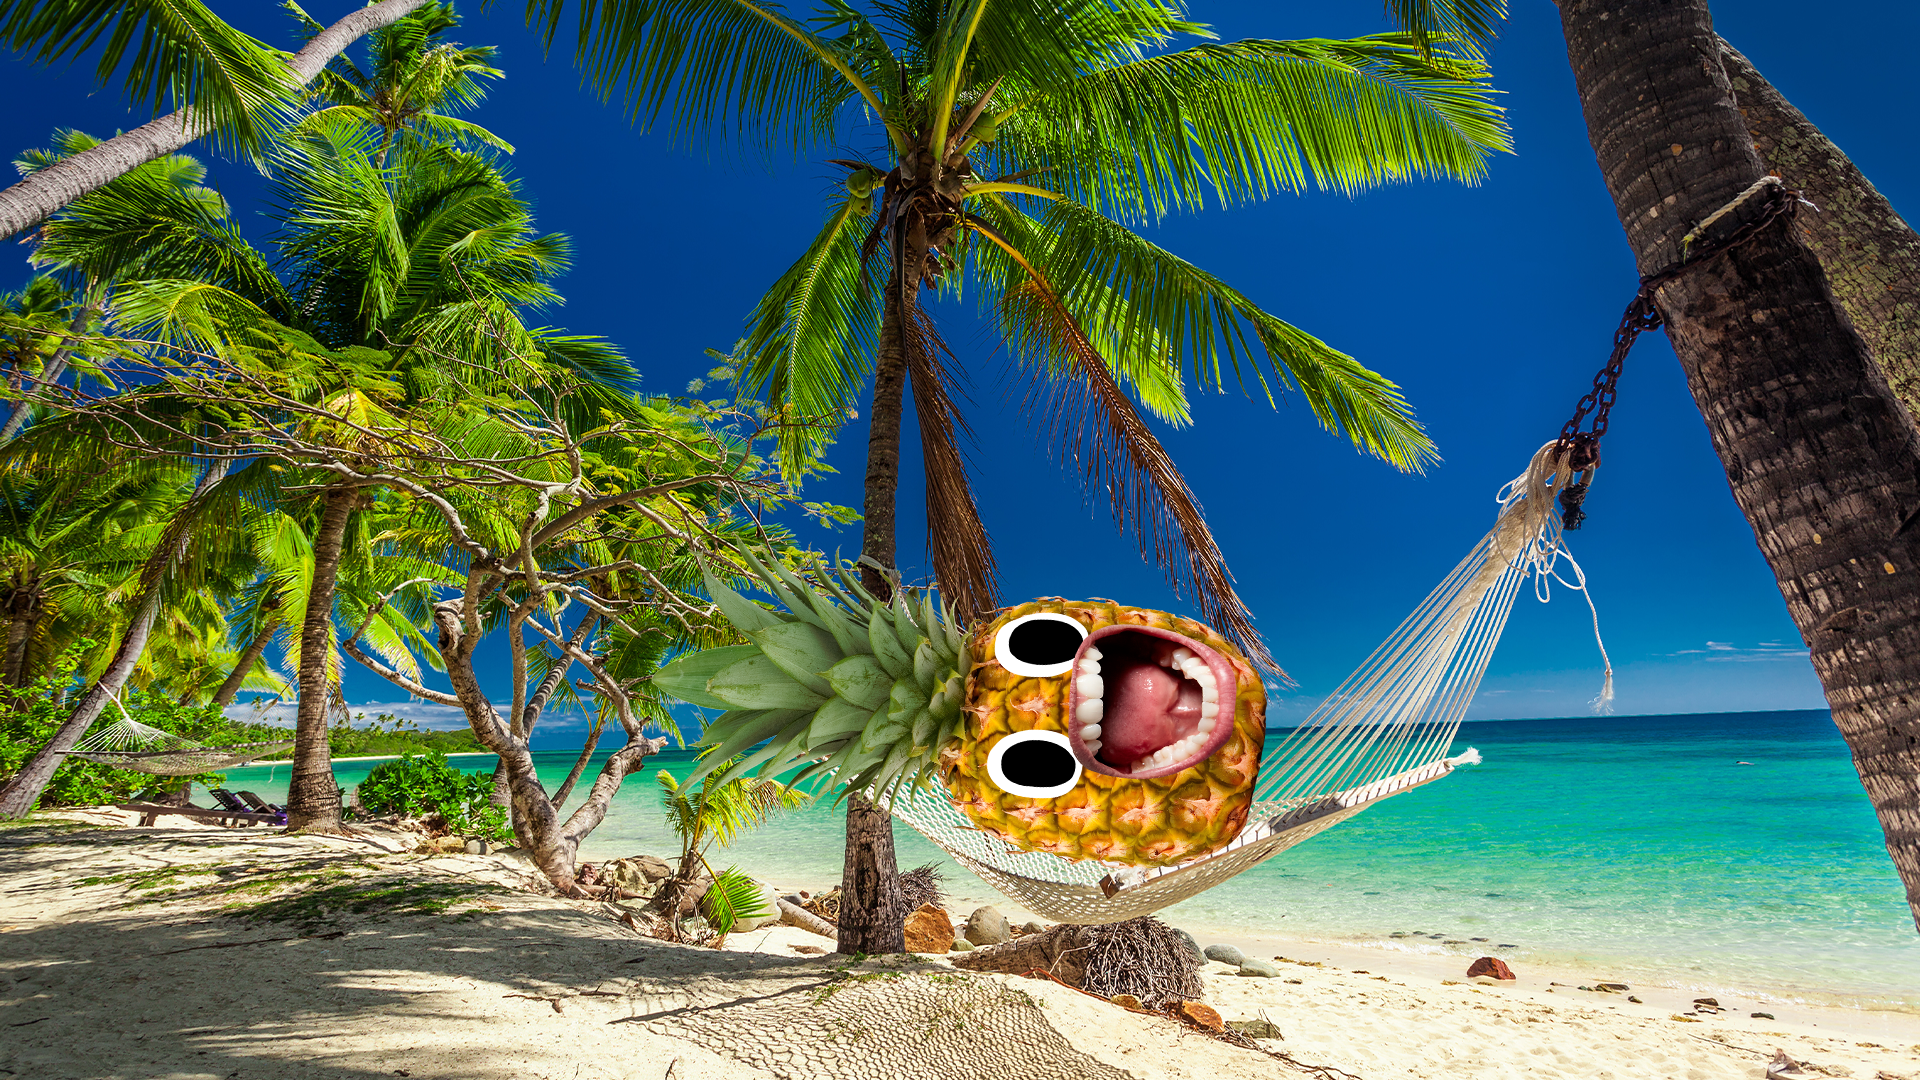 Screaming pineapple in a hammock on tropical beach